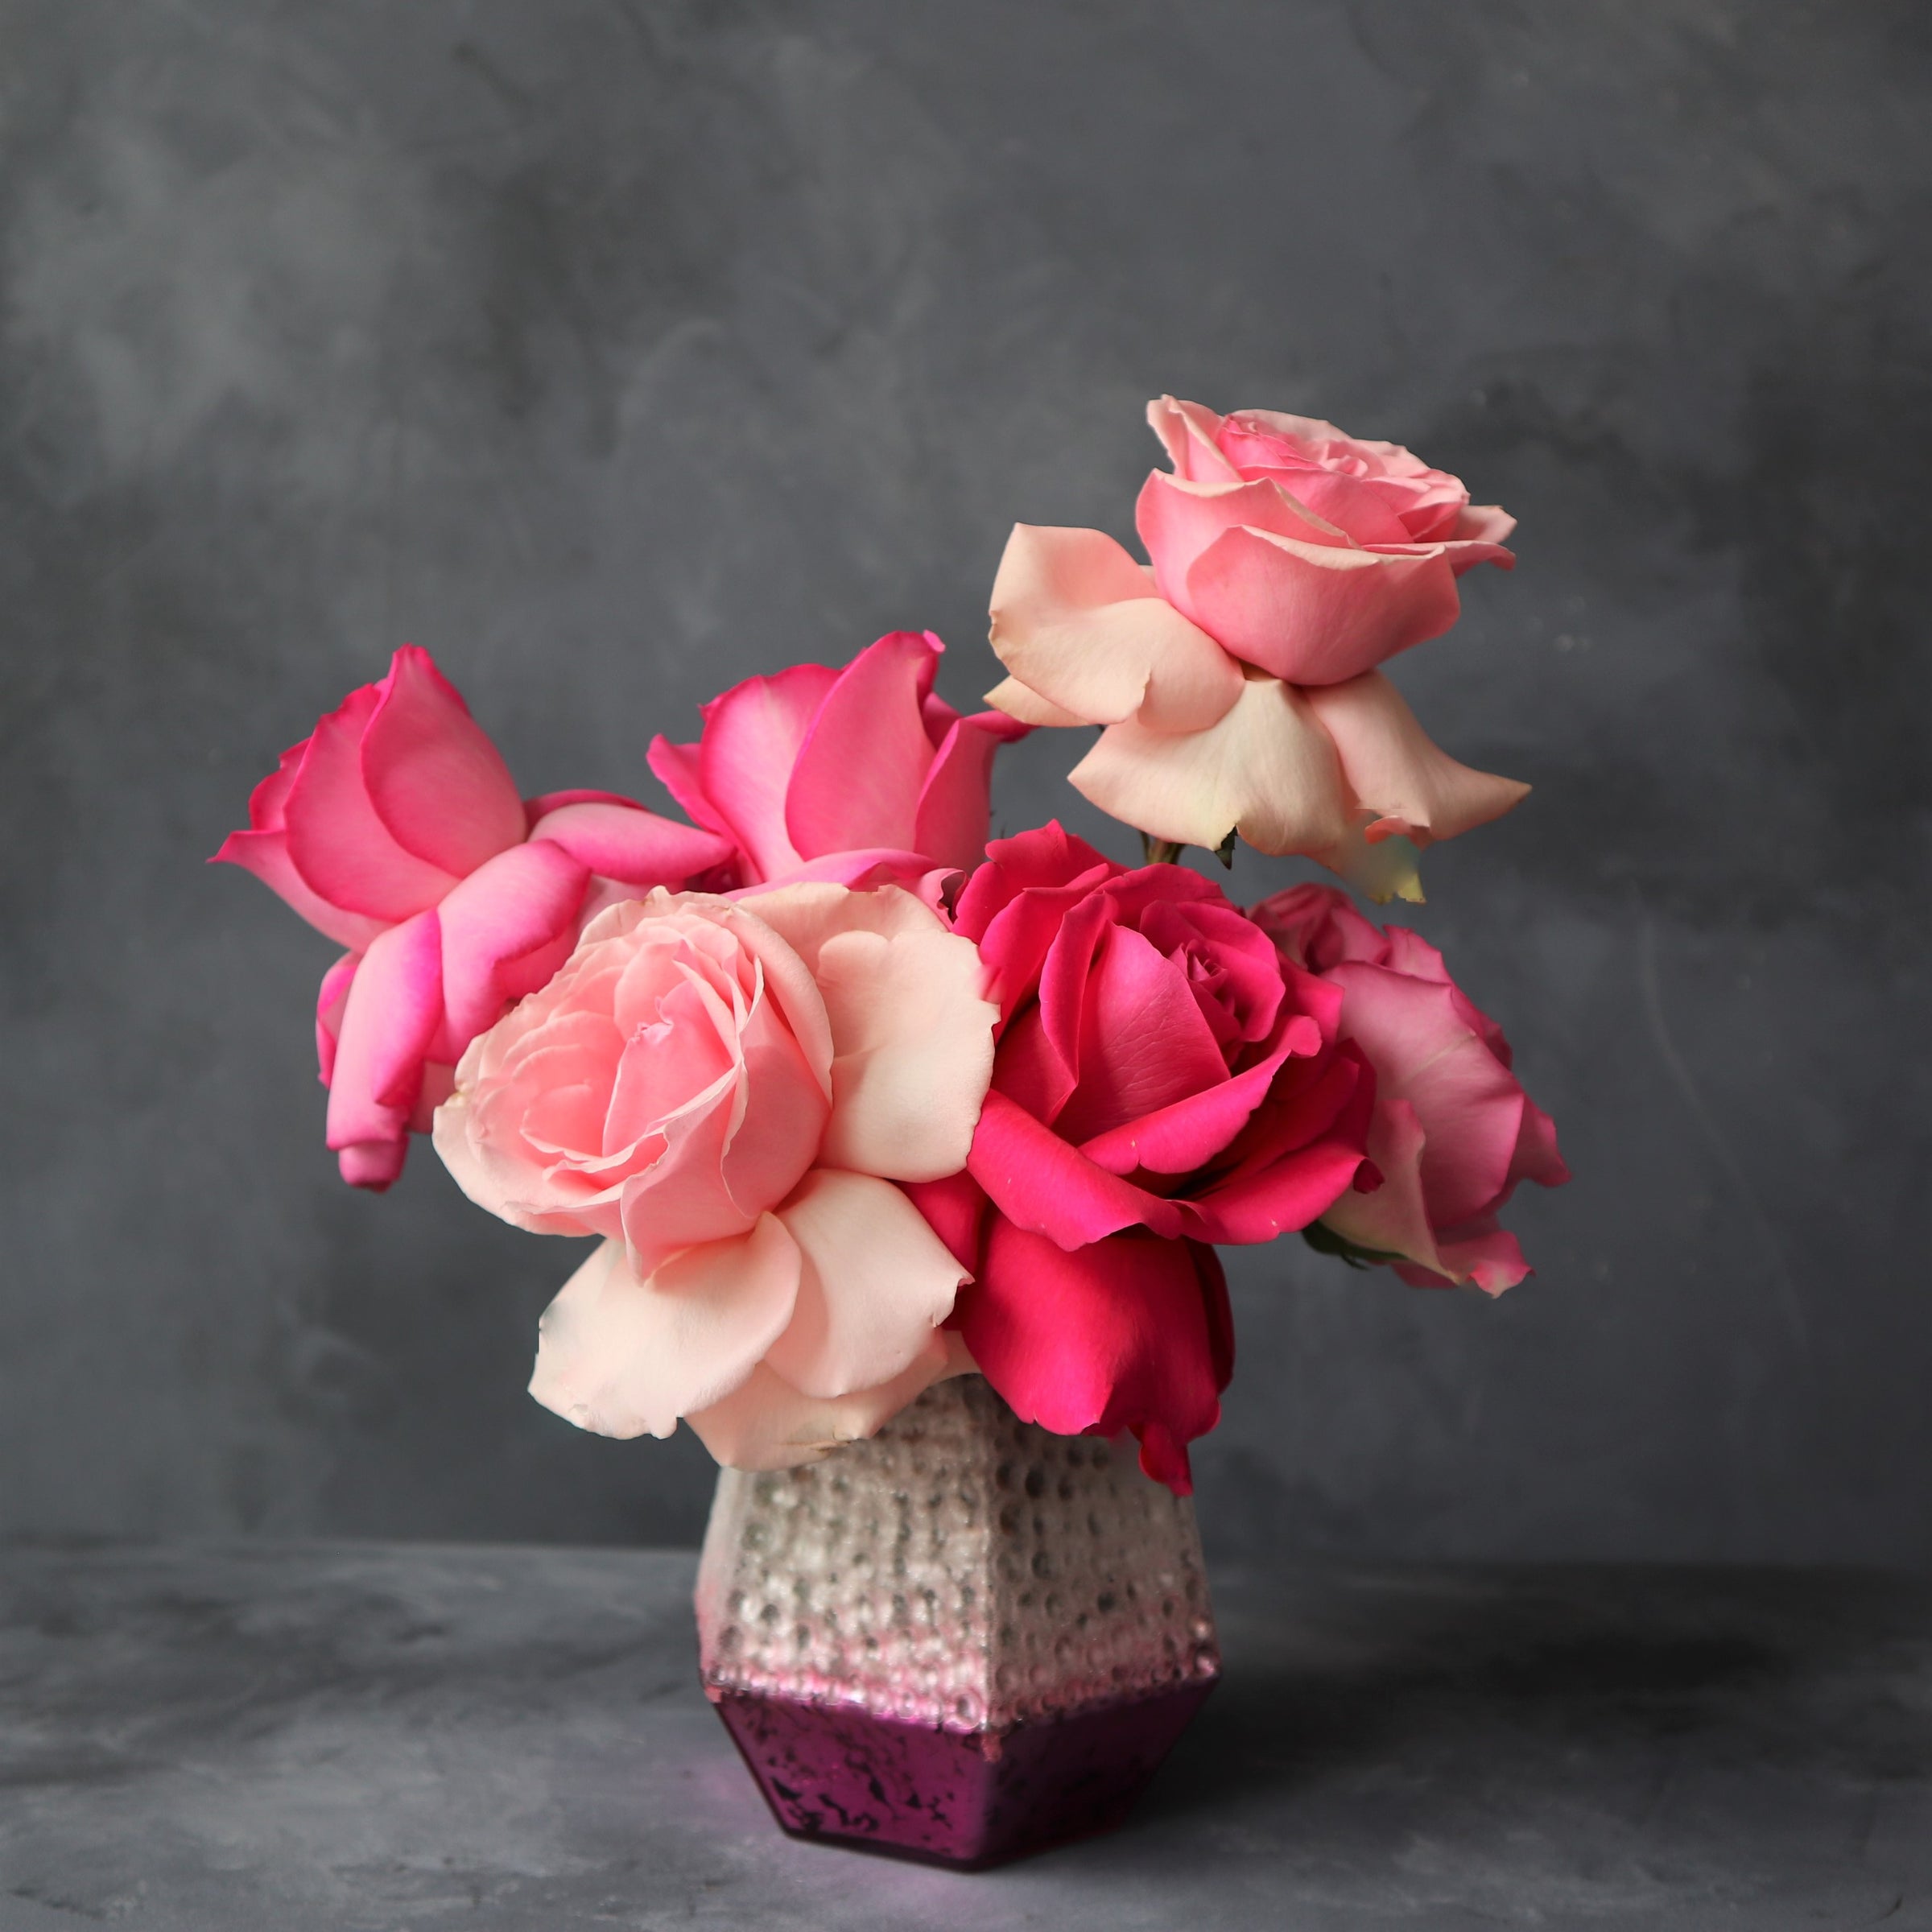 Assorted pink Rose arrangement